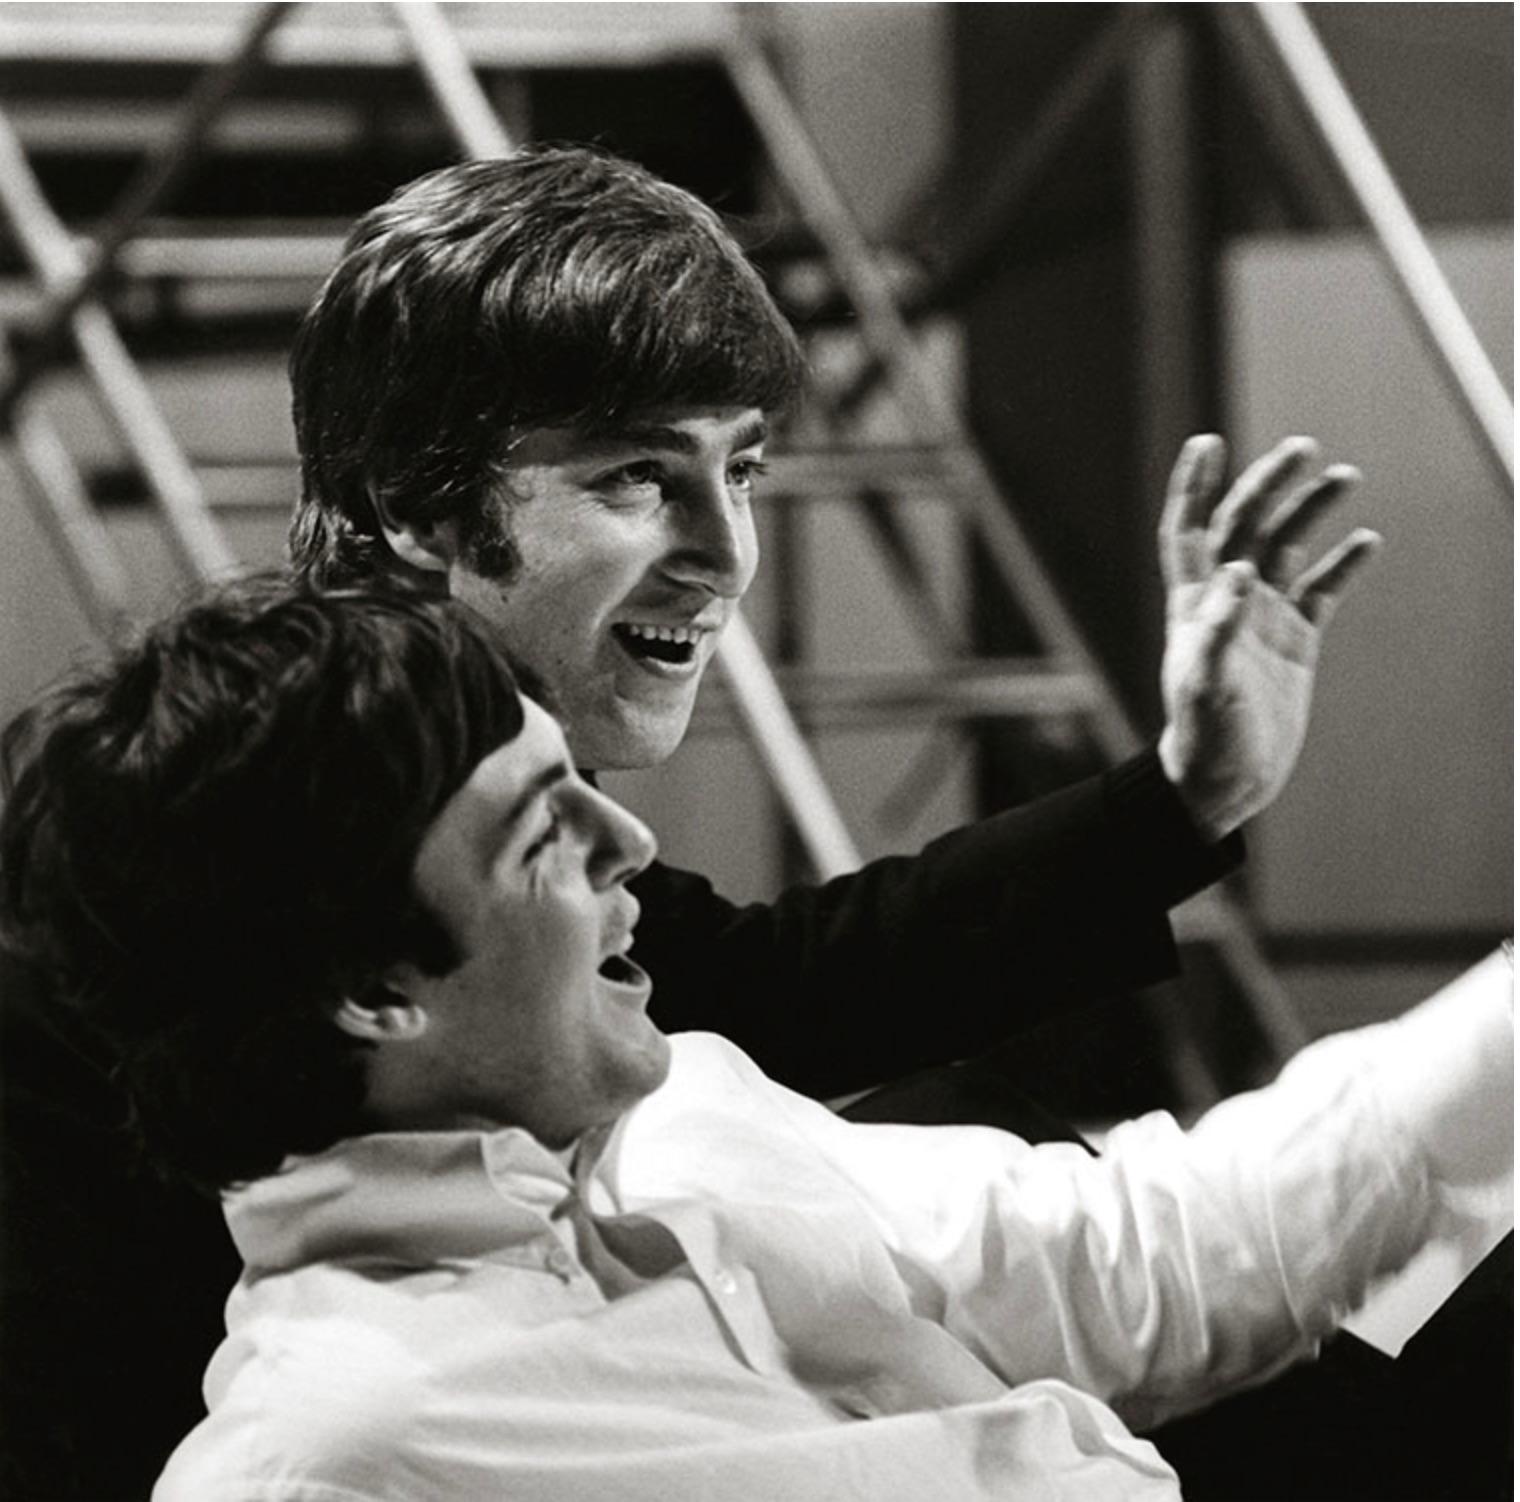 Terry O'Neill Black and White Photograph - Paul McCartney and John Lennon, Wembley Studios